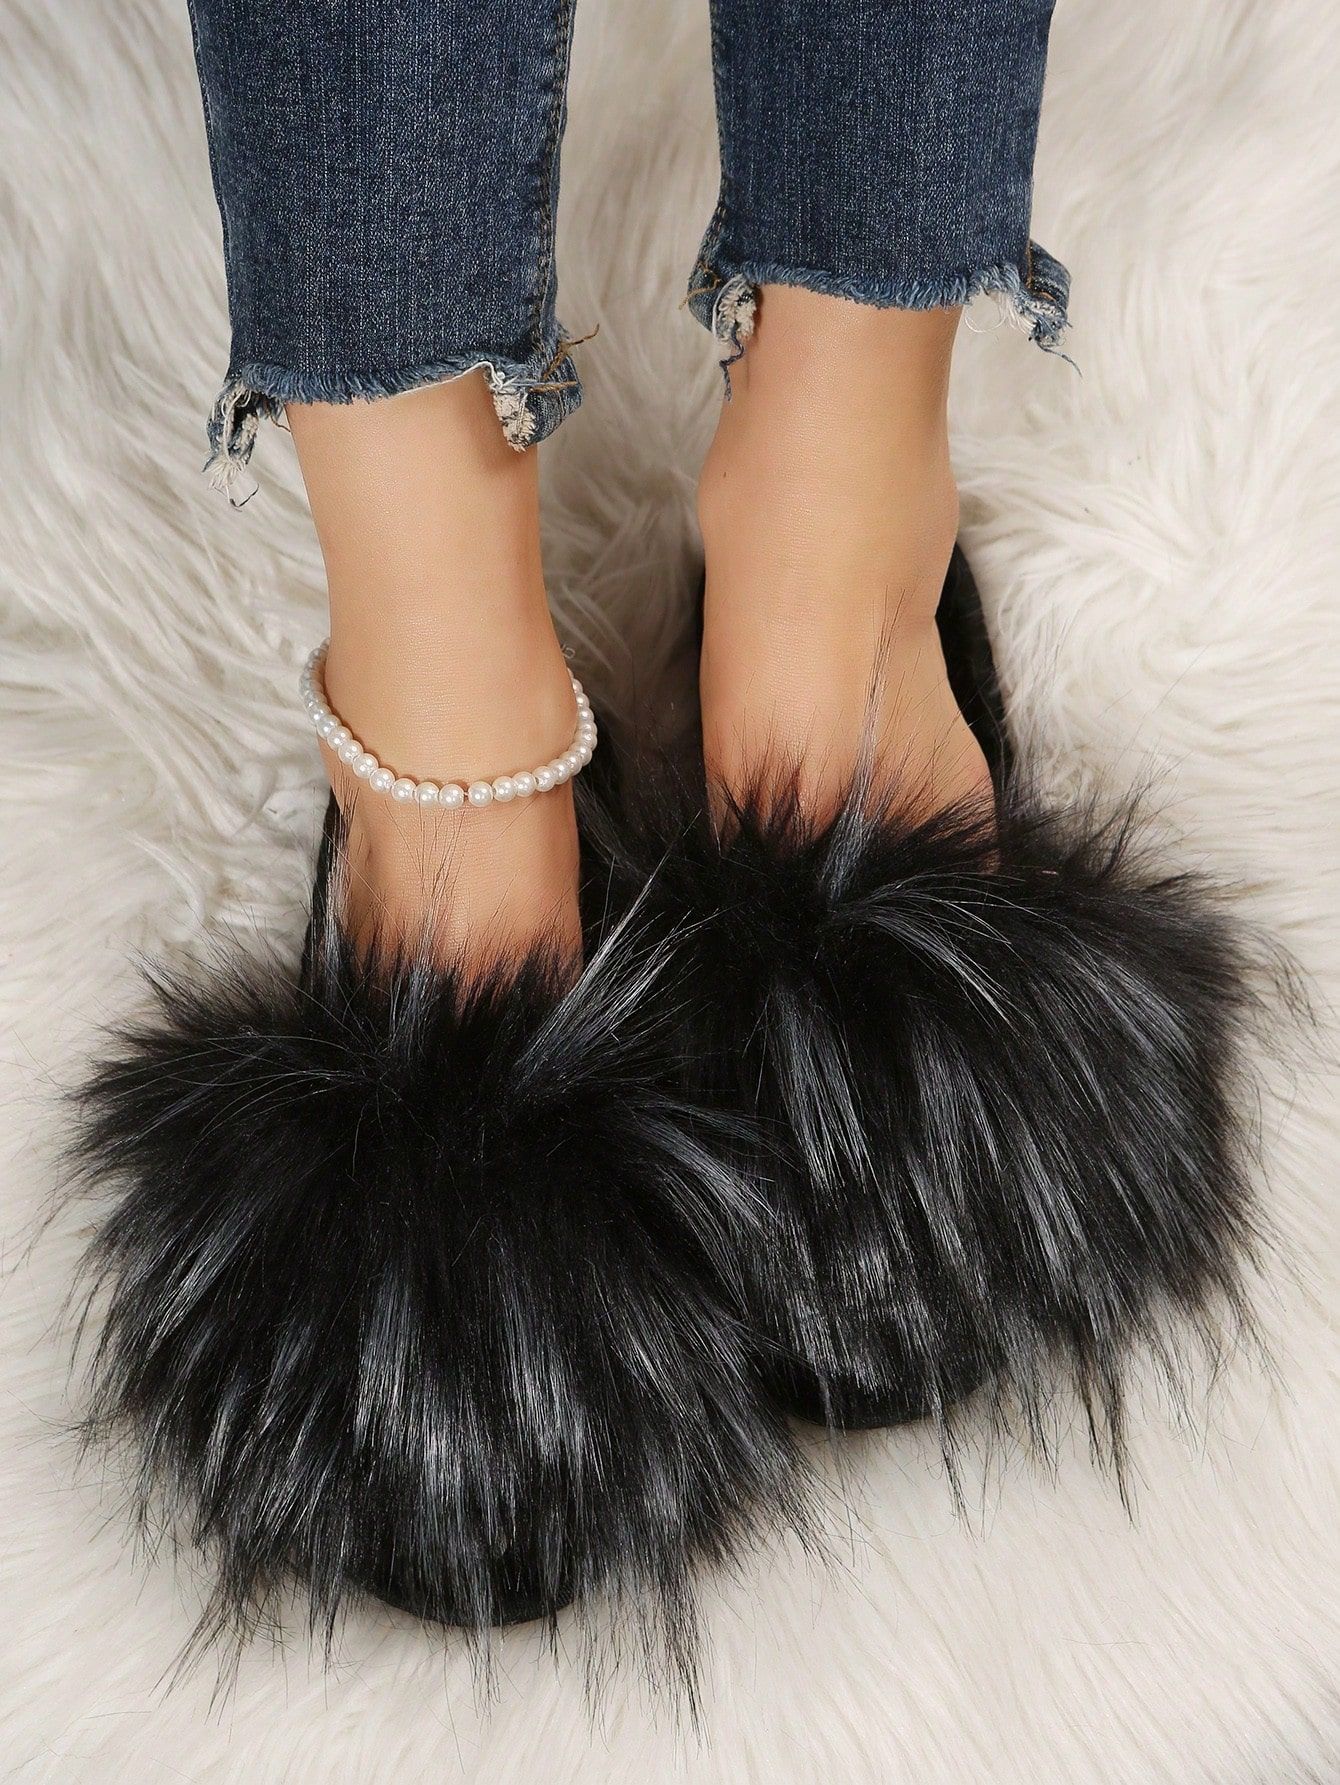 Women Minimalist Fuzzy Bedroom Slippers, Fashion Indoor Home Slippers | SHEIN